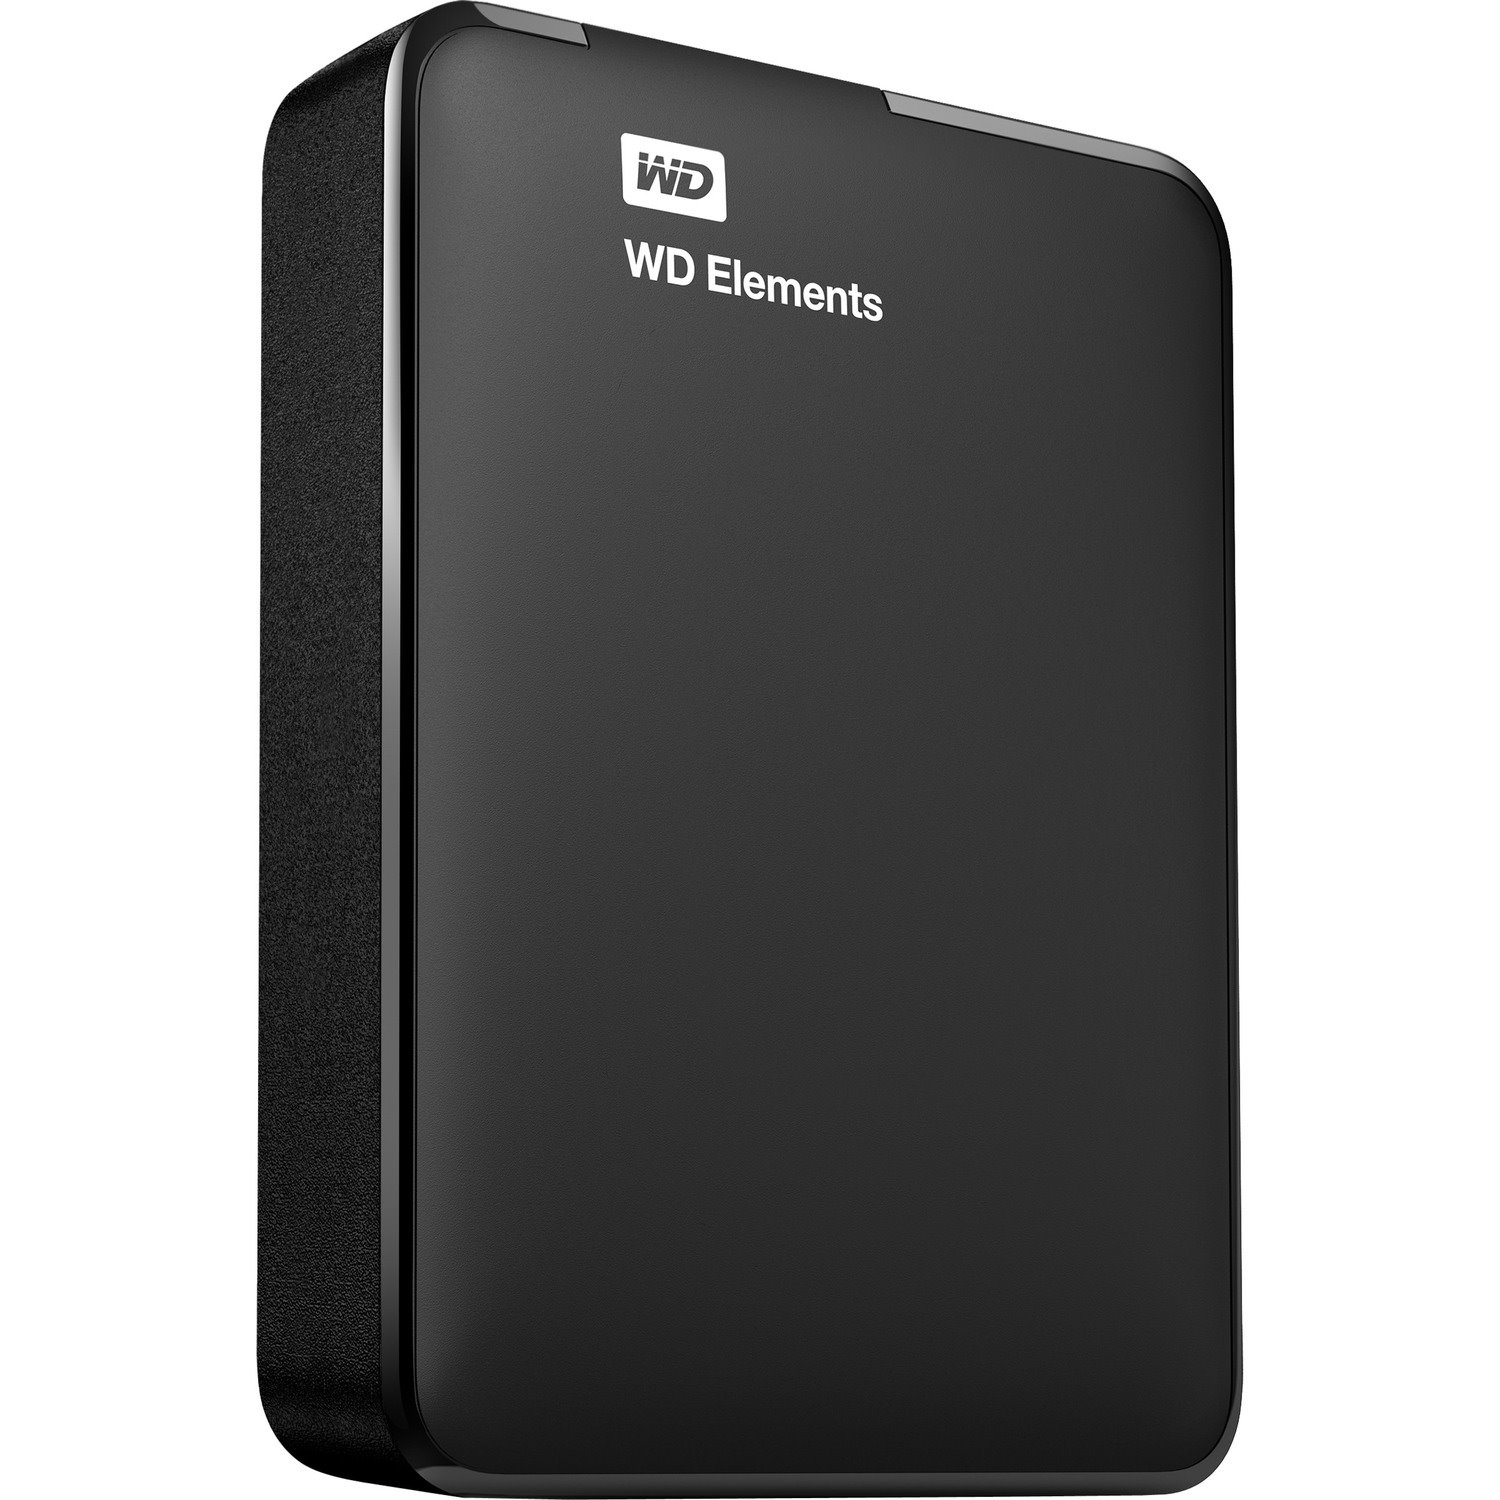 WD Elements WDBU6Y0030BBK 3 TB Portable Hard Drive - External